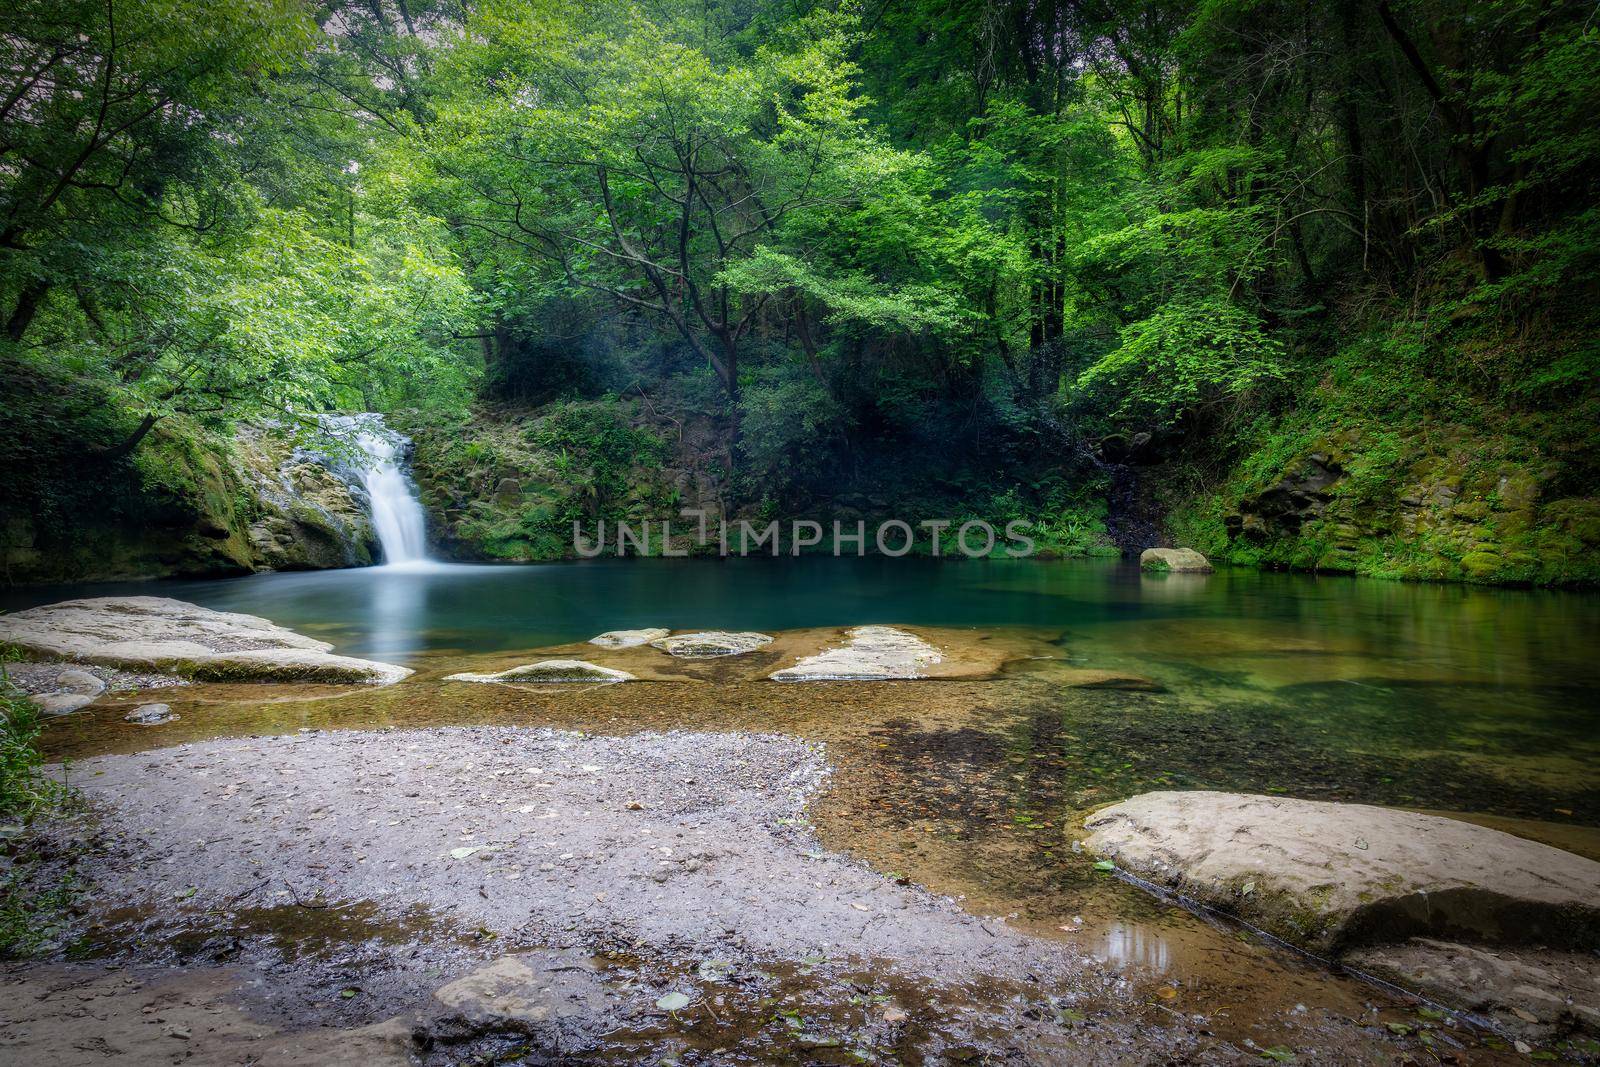 Beautiful waterfall in Spain in Catalonia, near the small village Les Planes de Hostoles